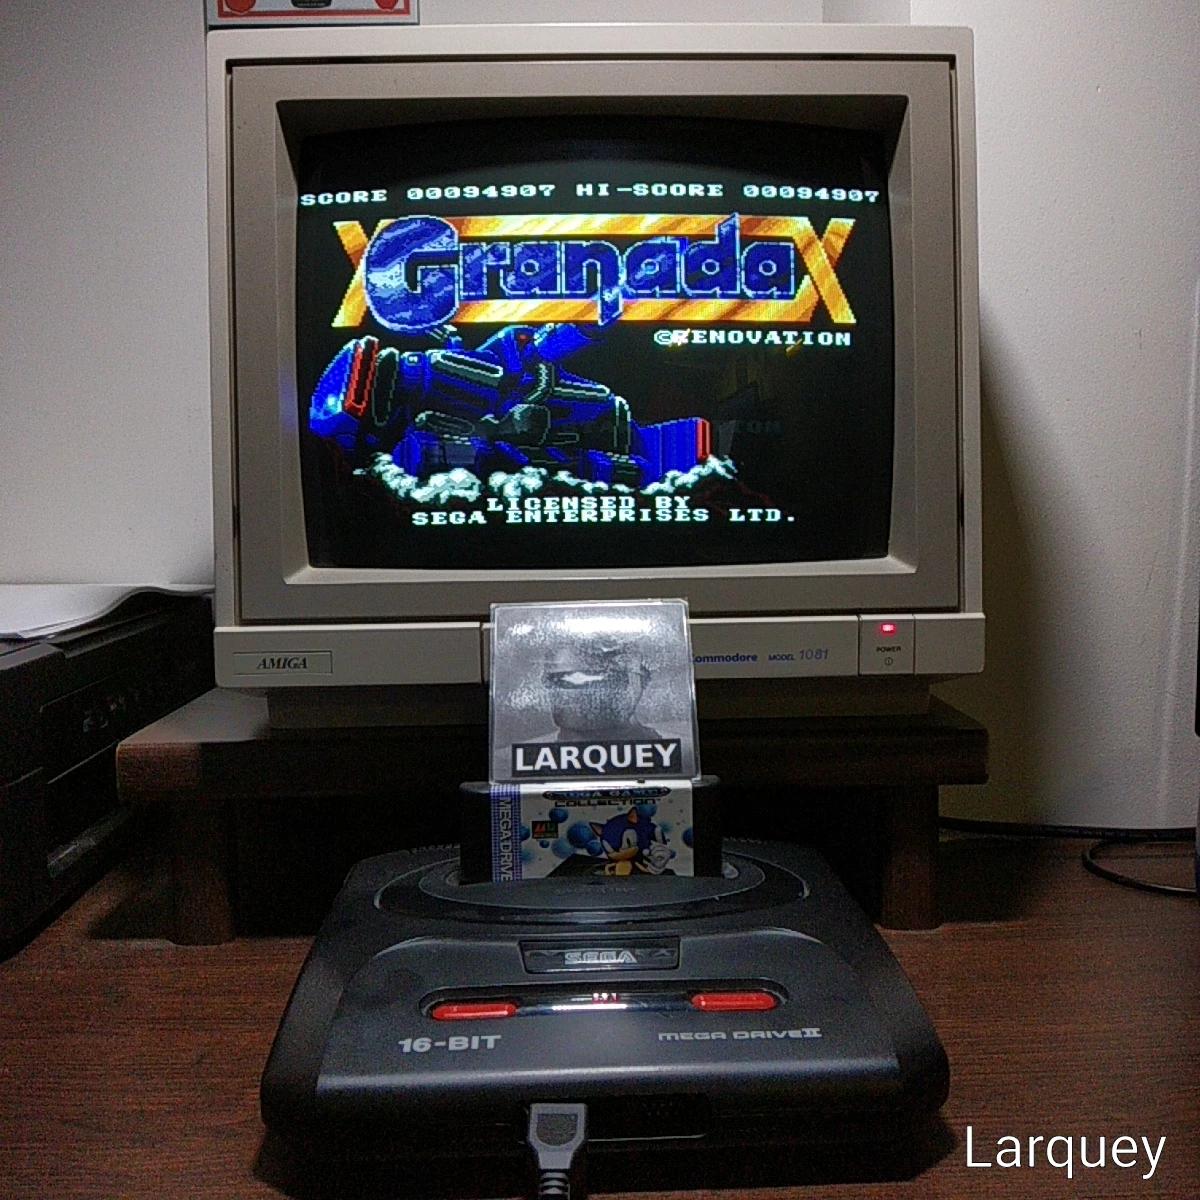 Larquey: Granada [Normal / 3 Lives] (Sega Genesis / MegaDrive) 64,909 points on 2021-09-25 03:16:07